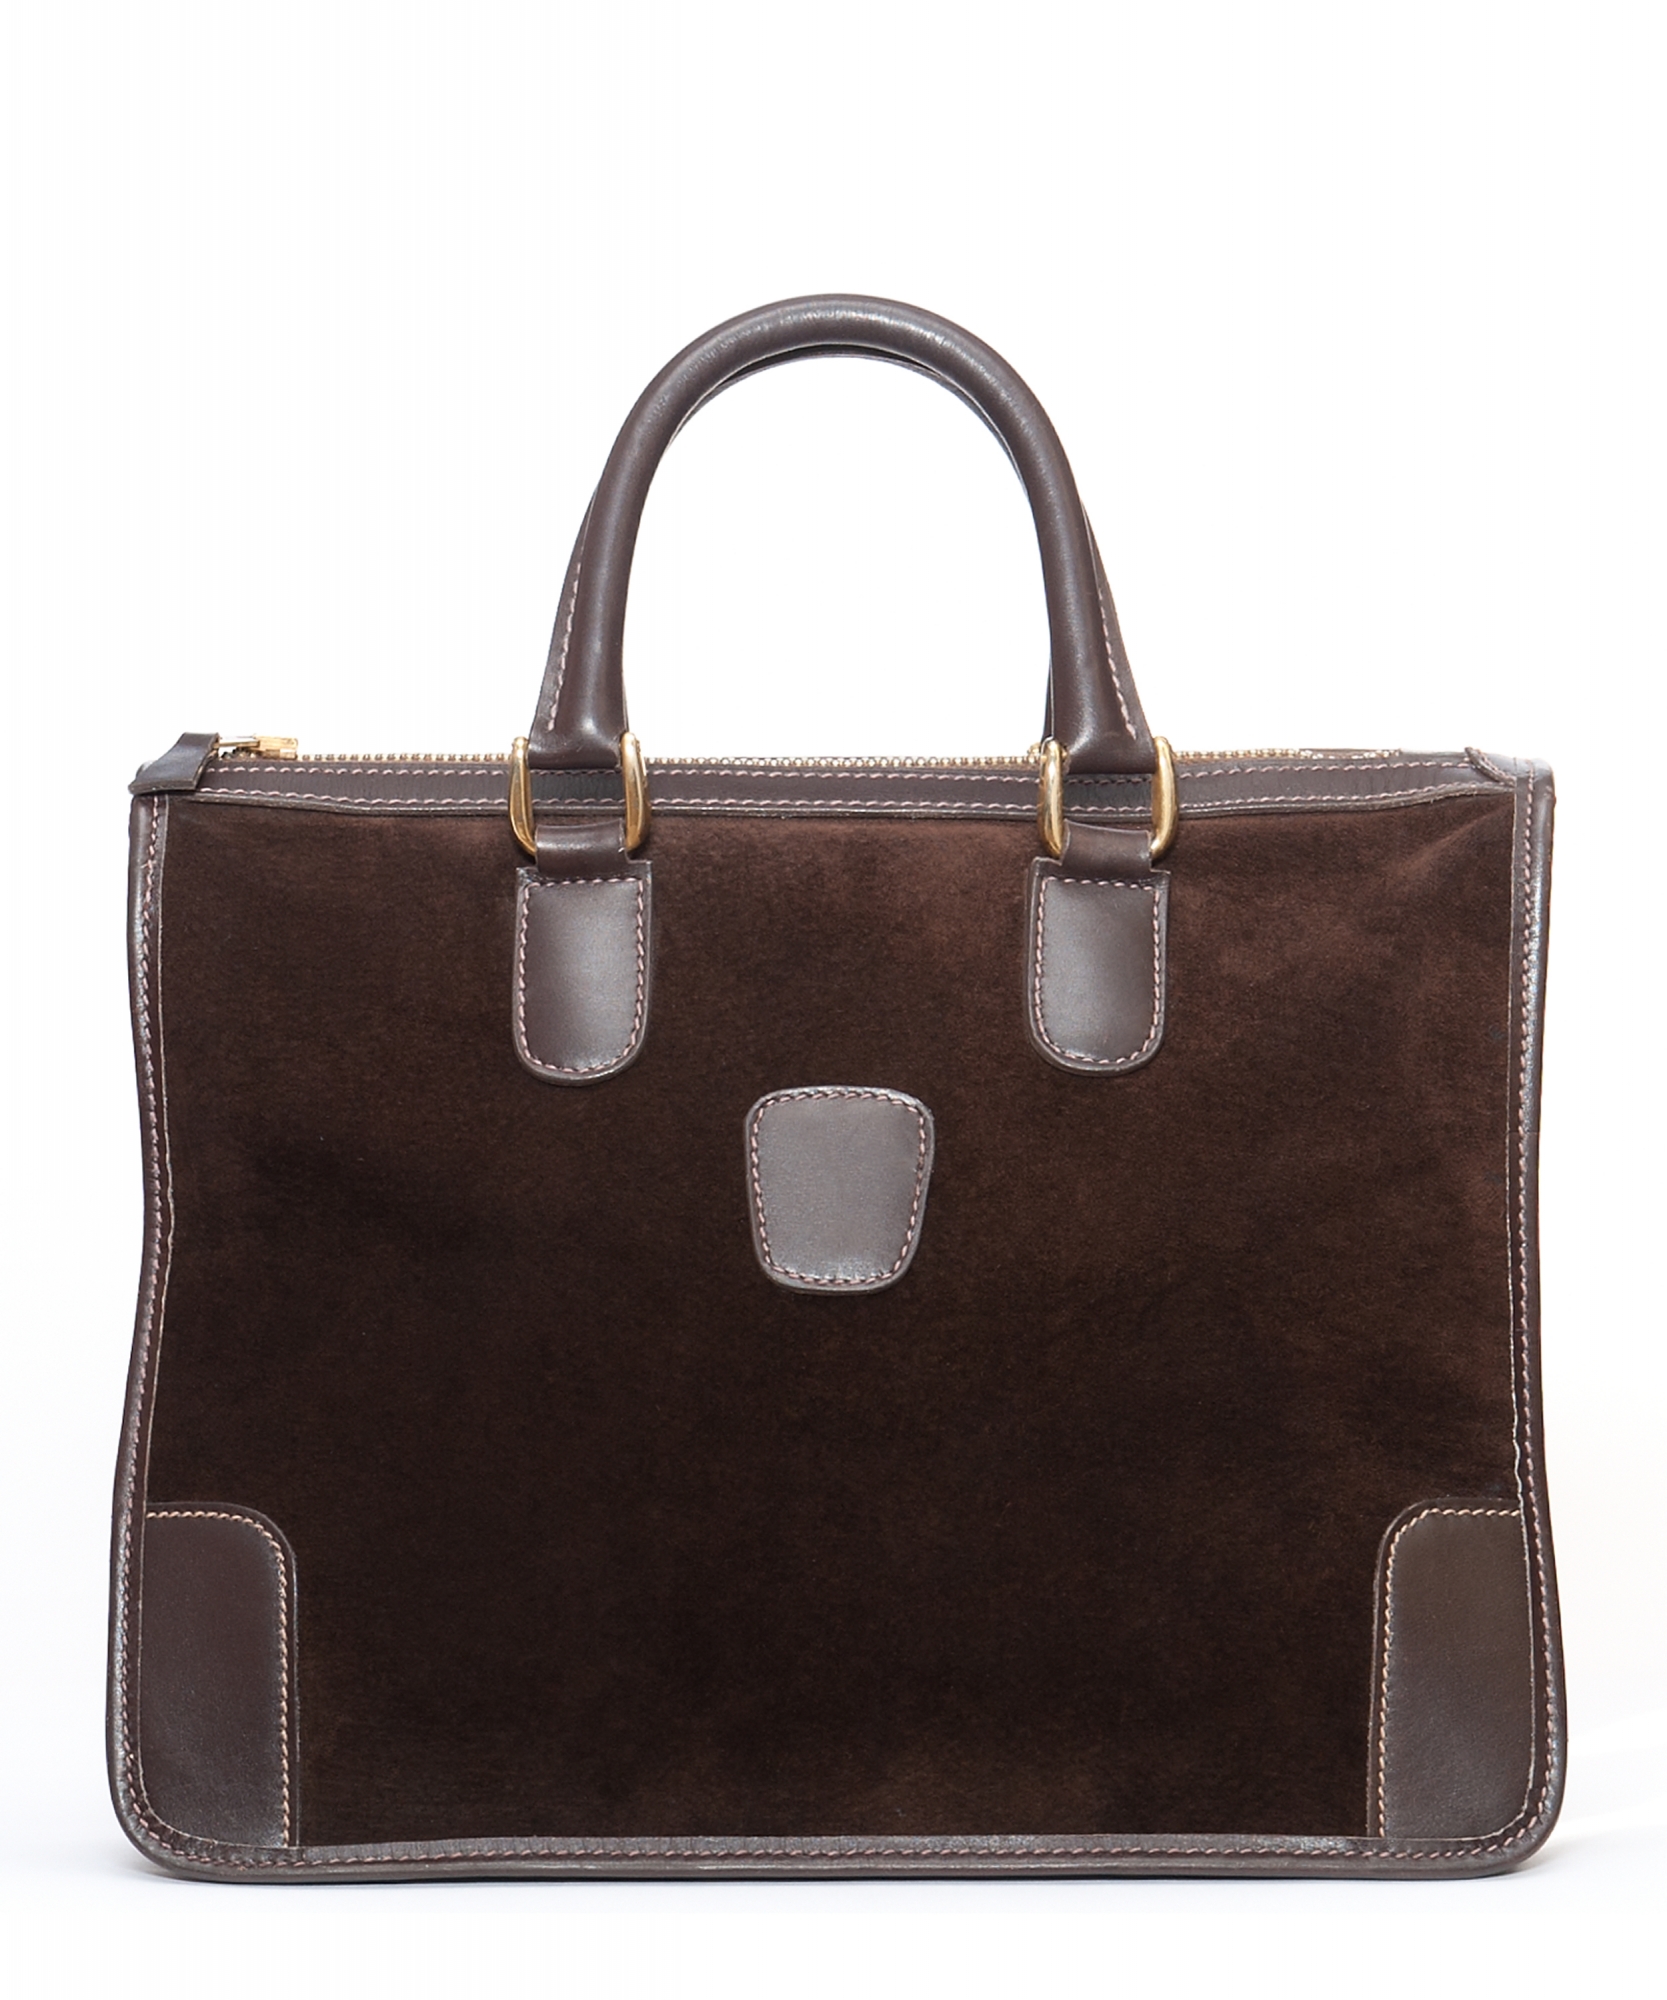 Gucci Brown Suede Leather Handbag - Gucci | ArtListings